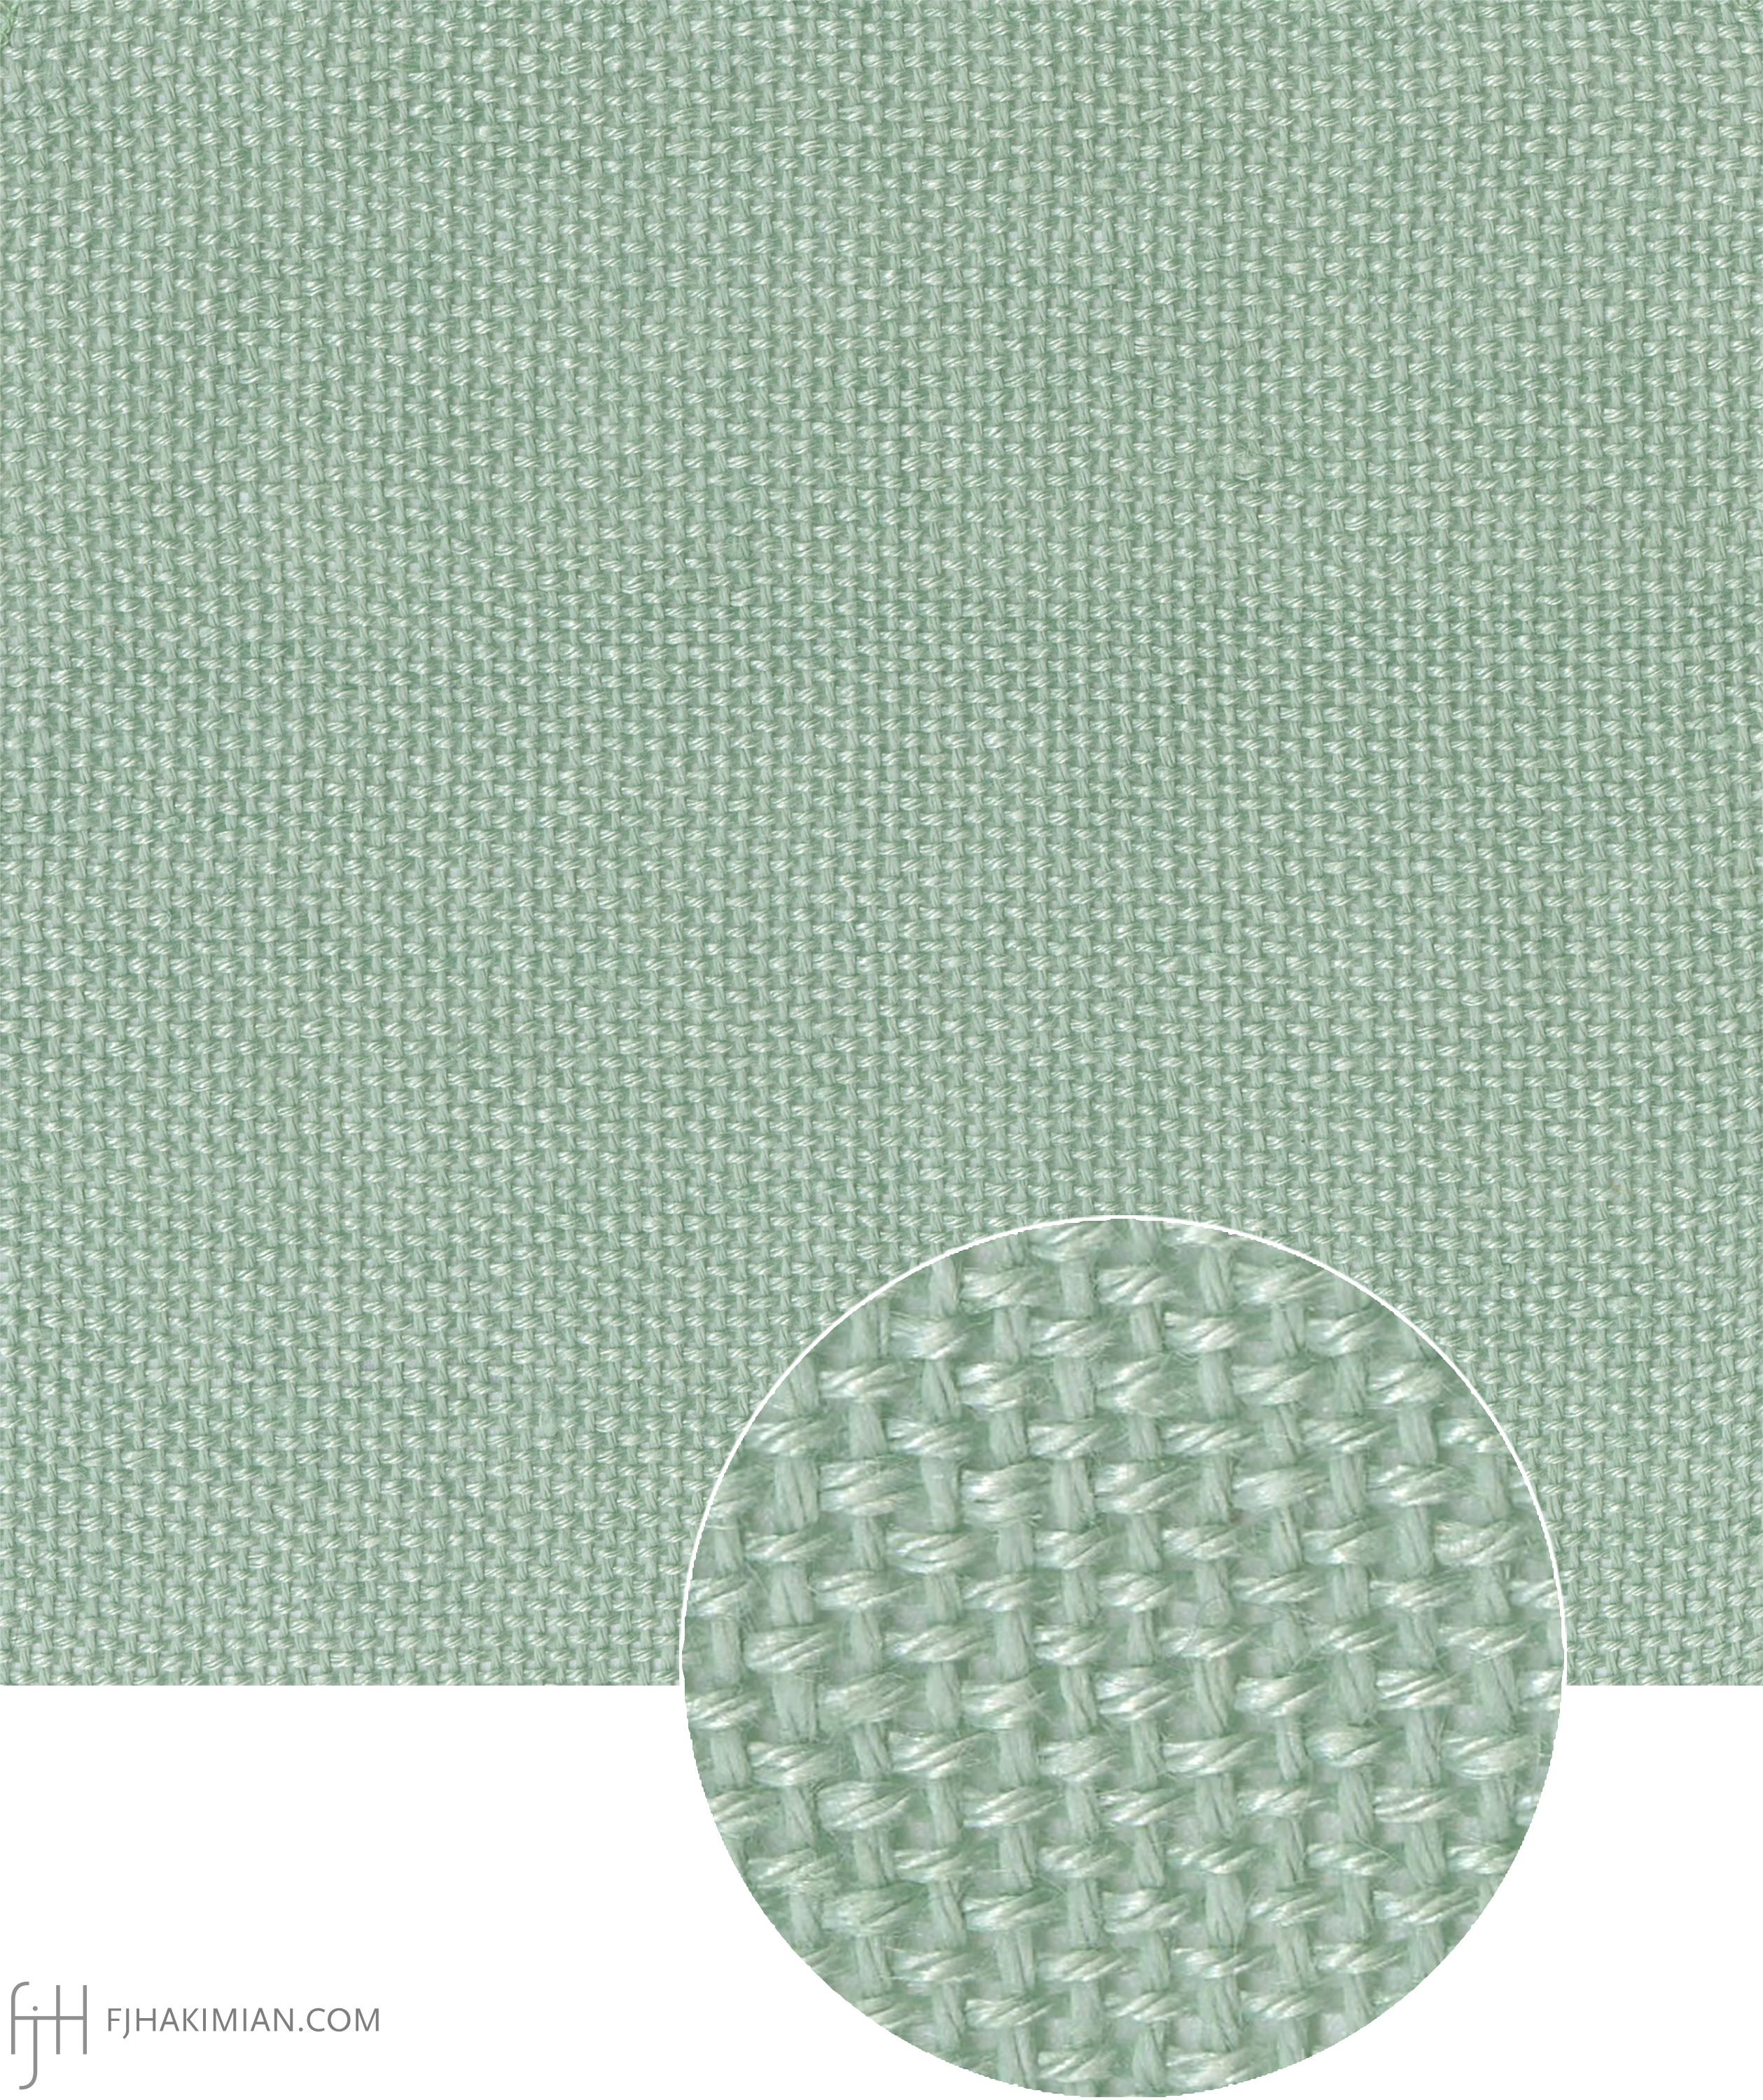 AB-LTLVLV Upholstery Fabric | FJ Hakimian Carpet Gallery, New York 